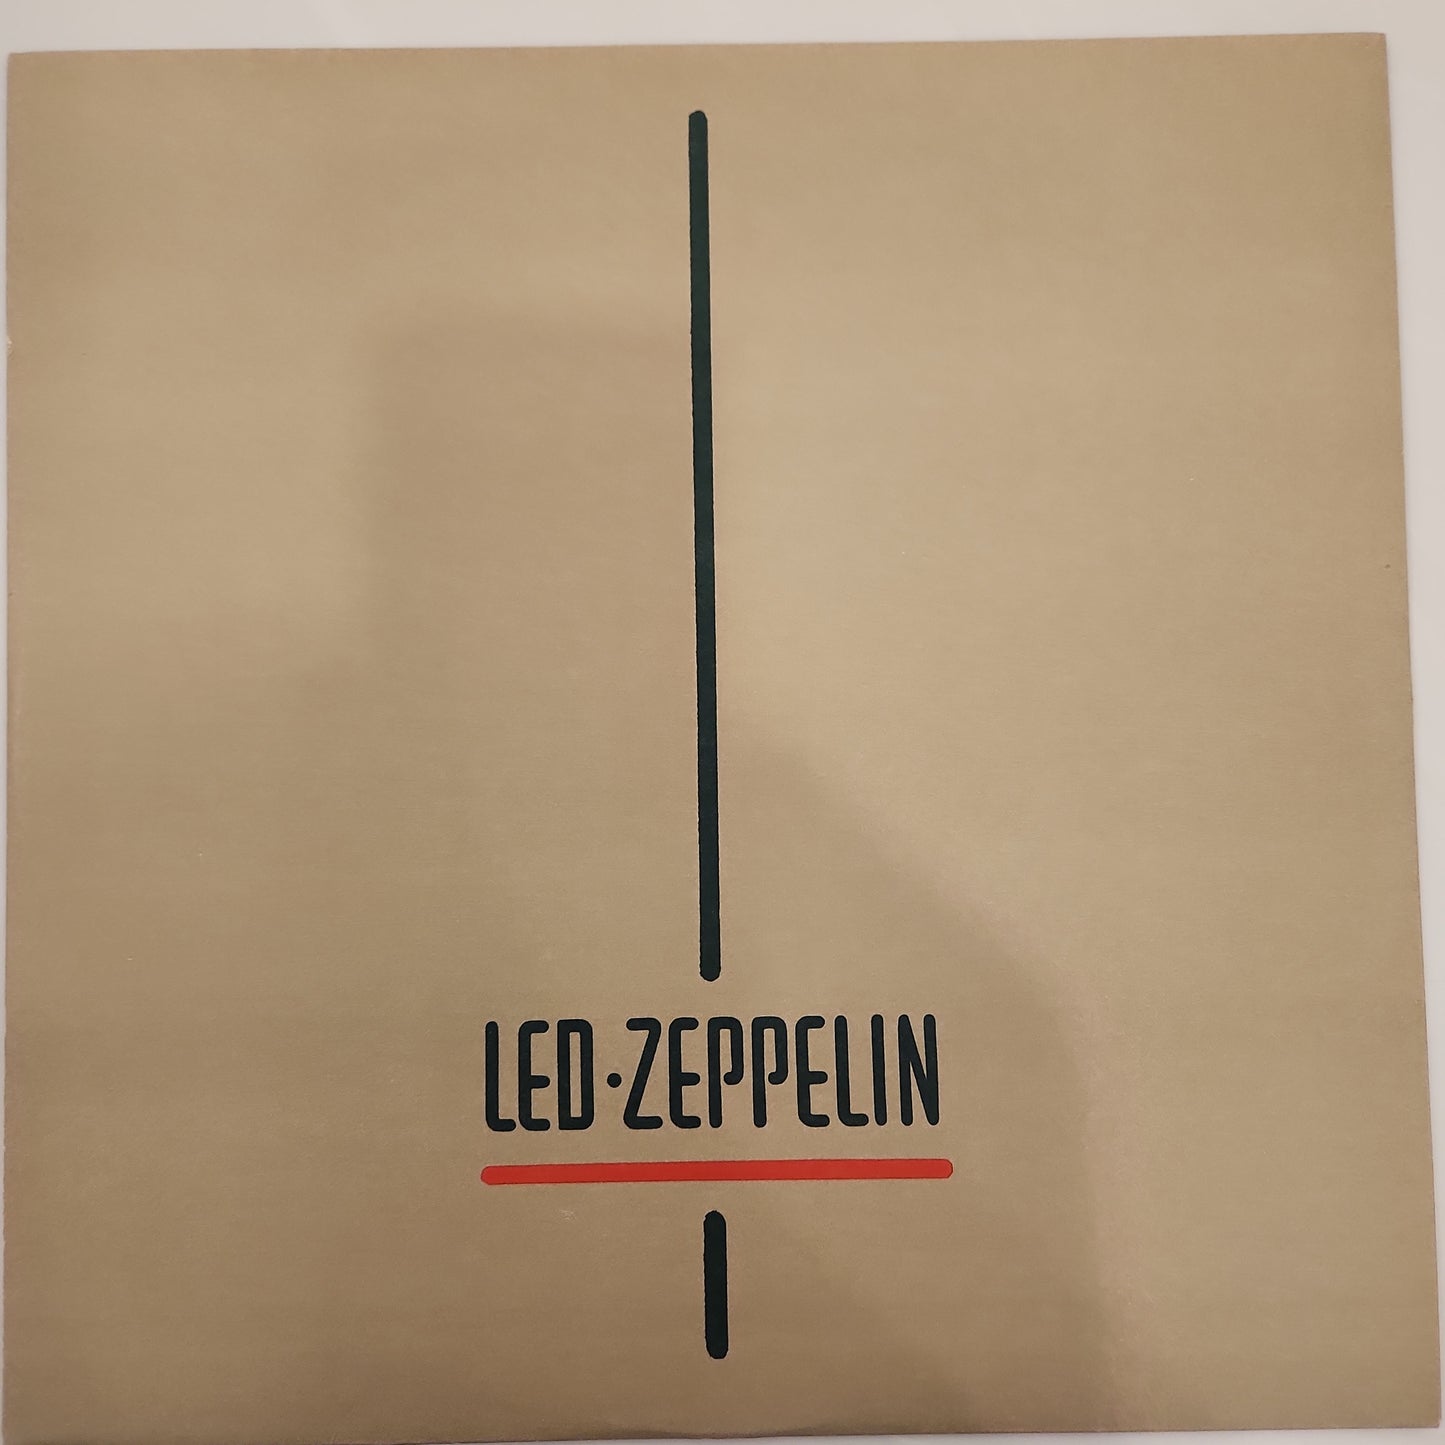 Led Zeppelin - CODA (B73)